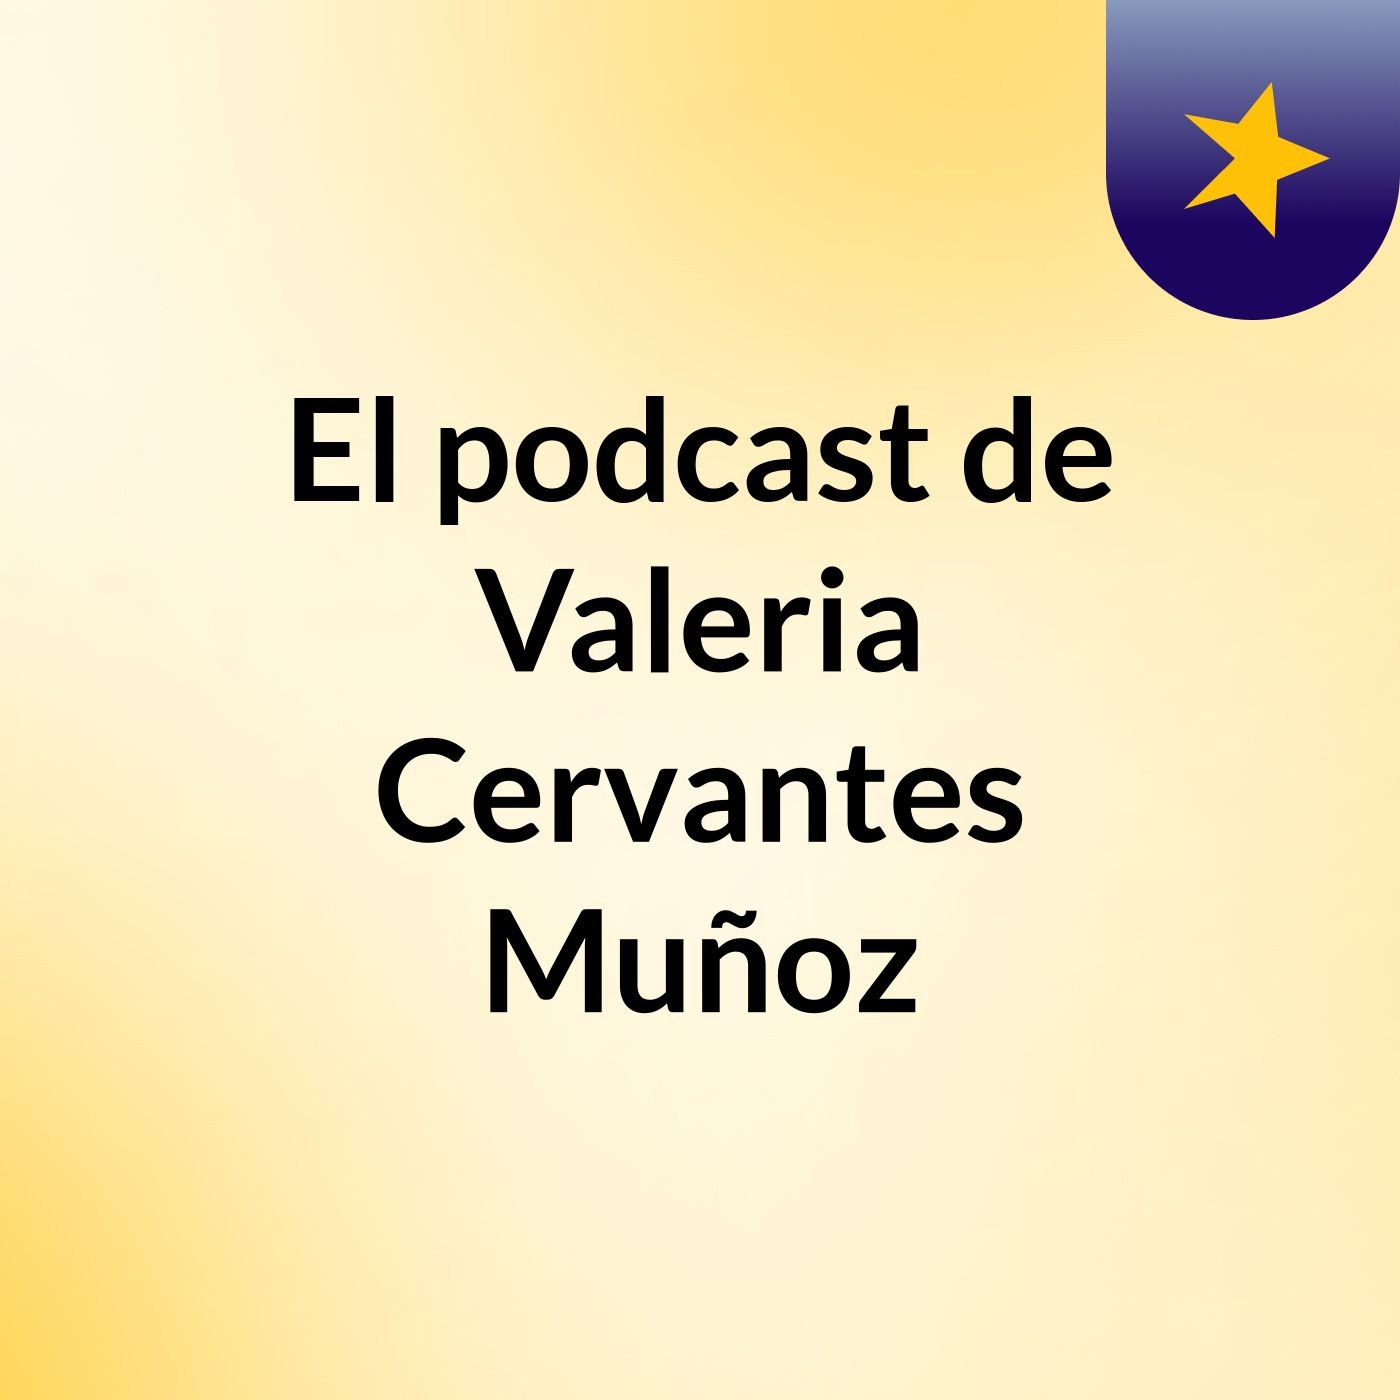 El podcast de Valeria Cervantes Muñoz